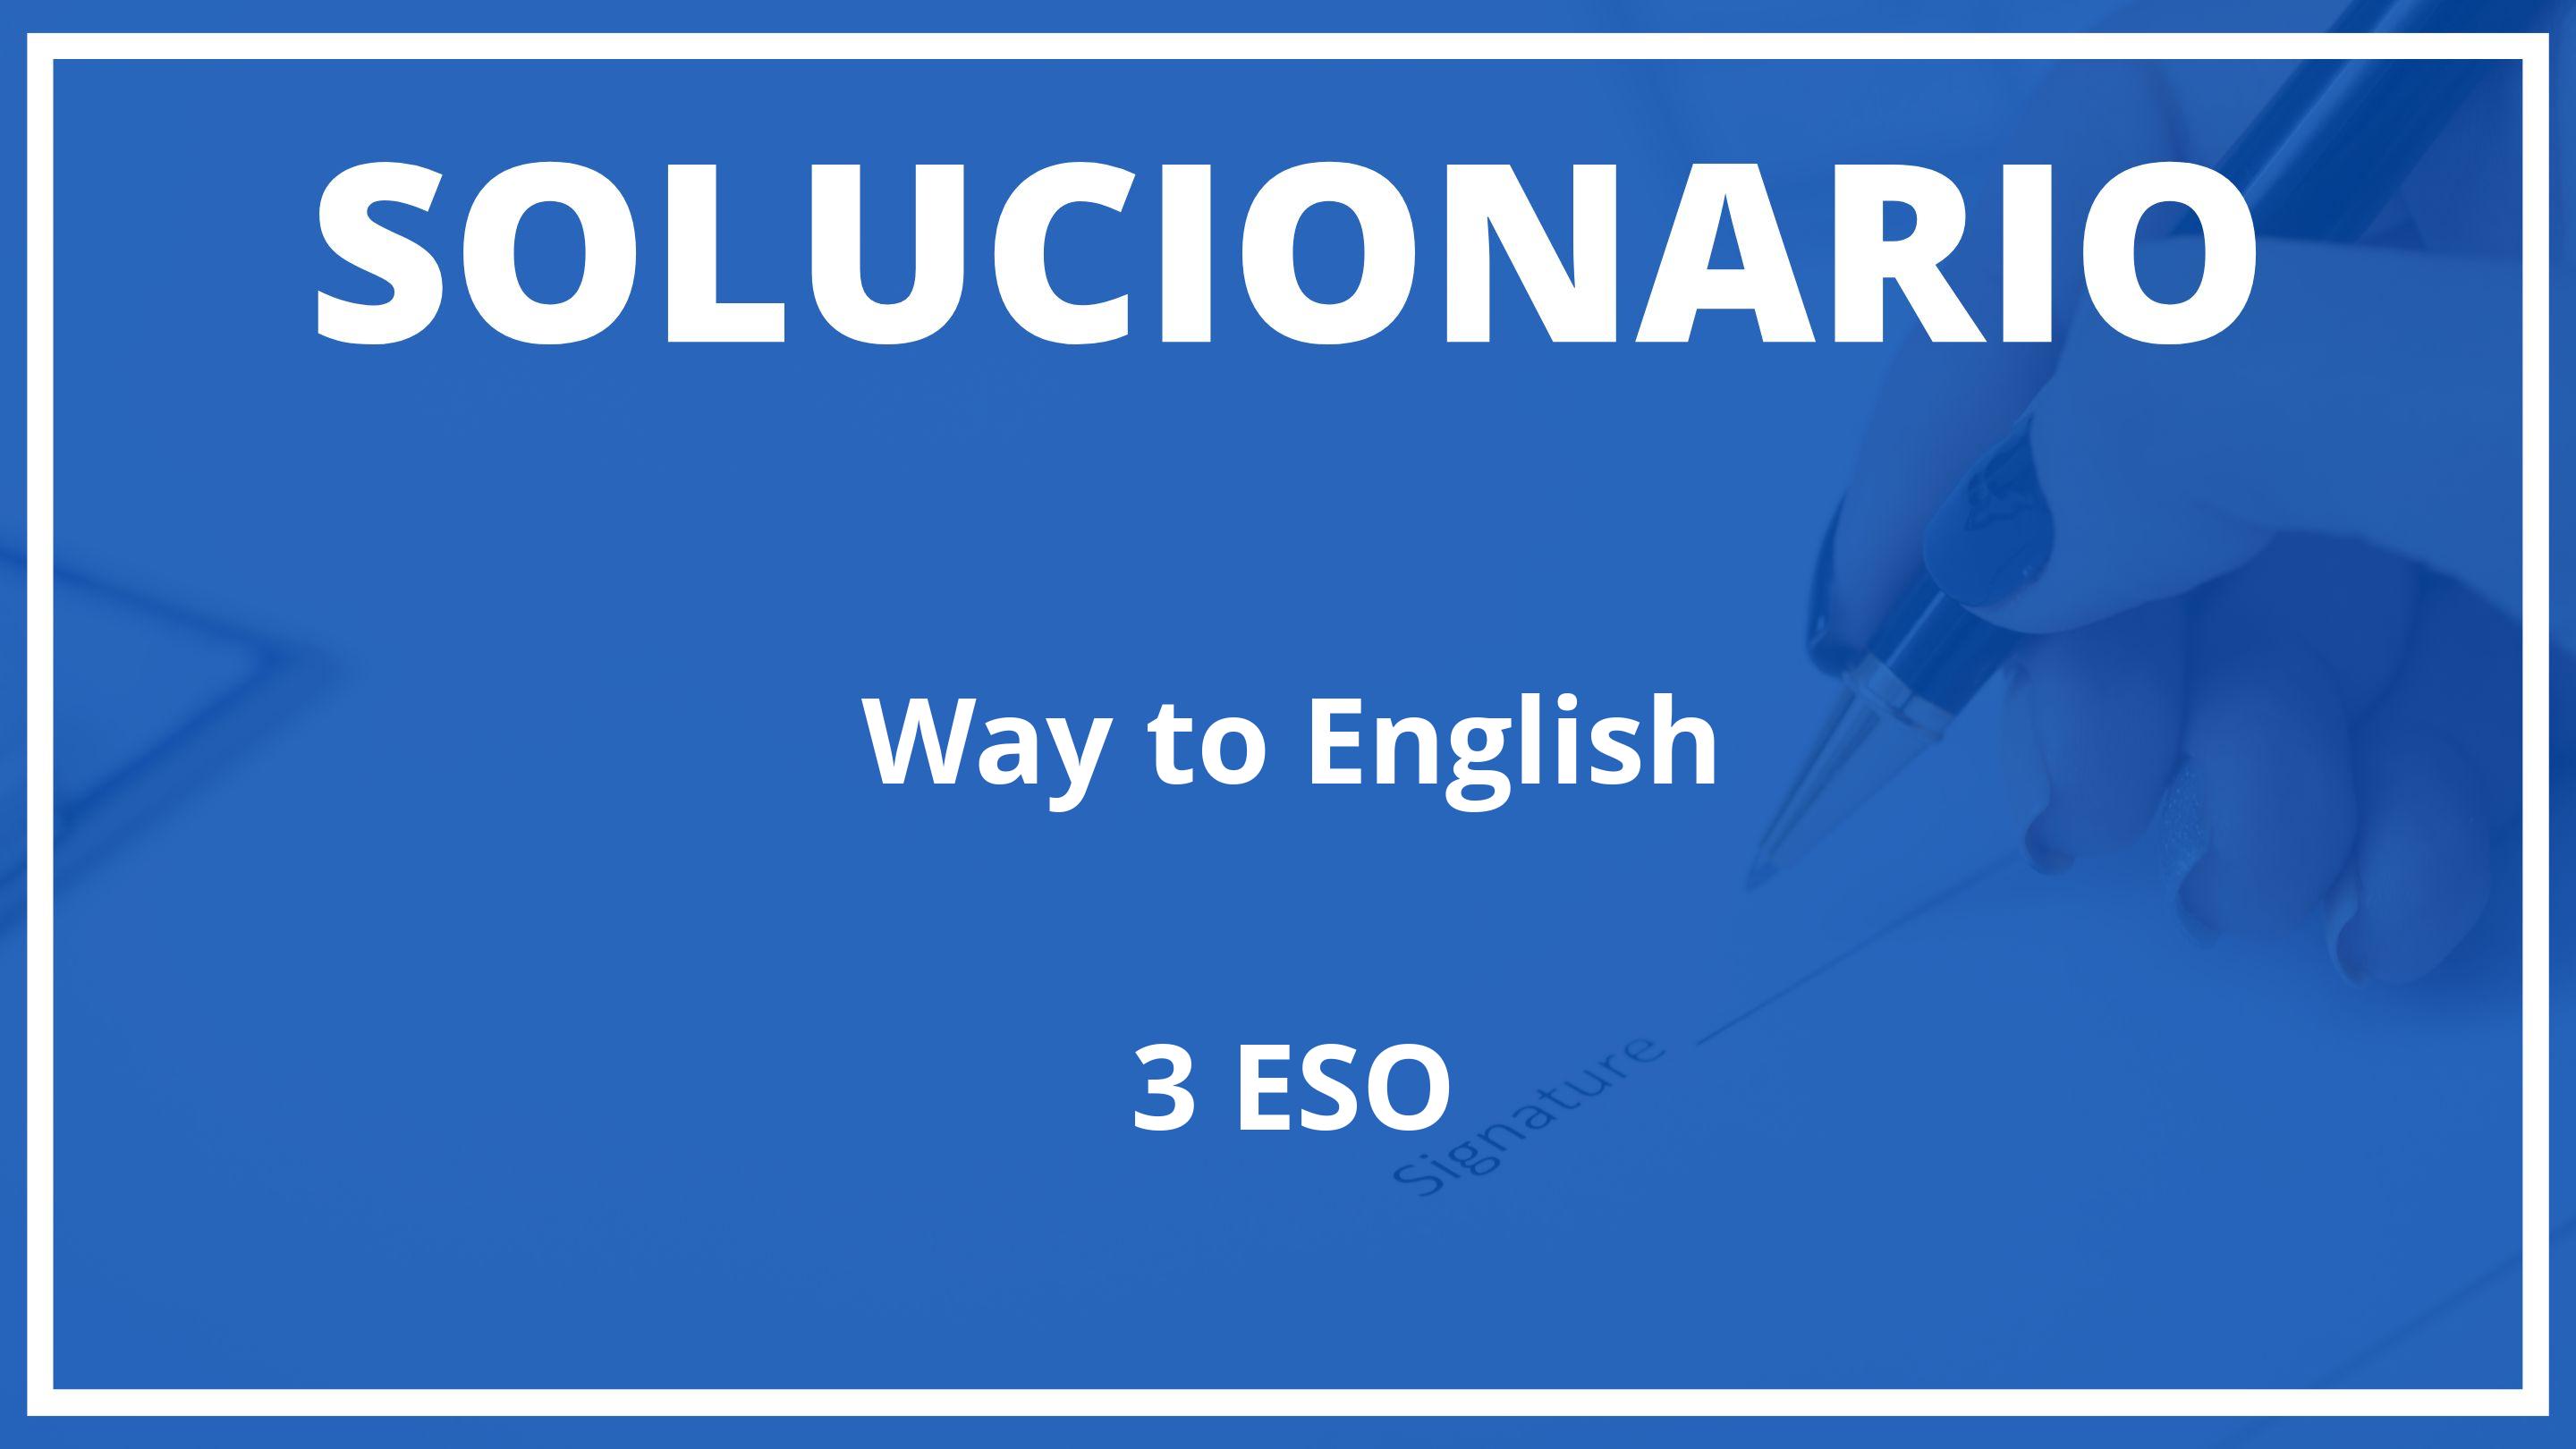 Solucionario Way to English Burlington Books 3 ESO